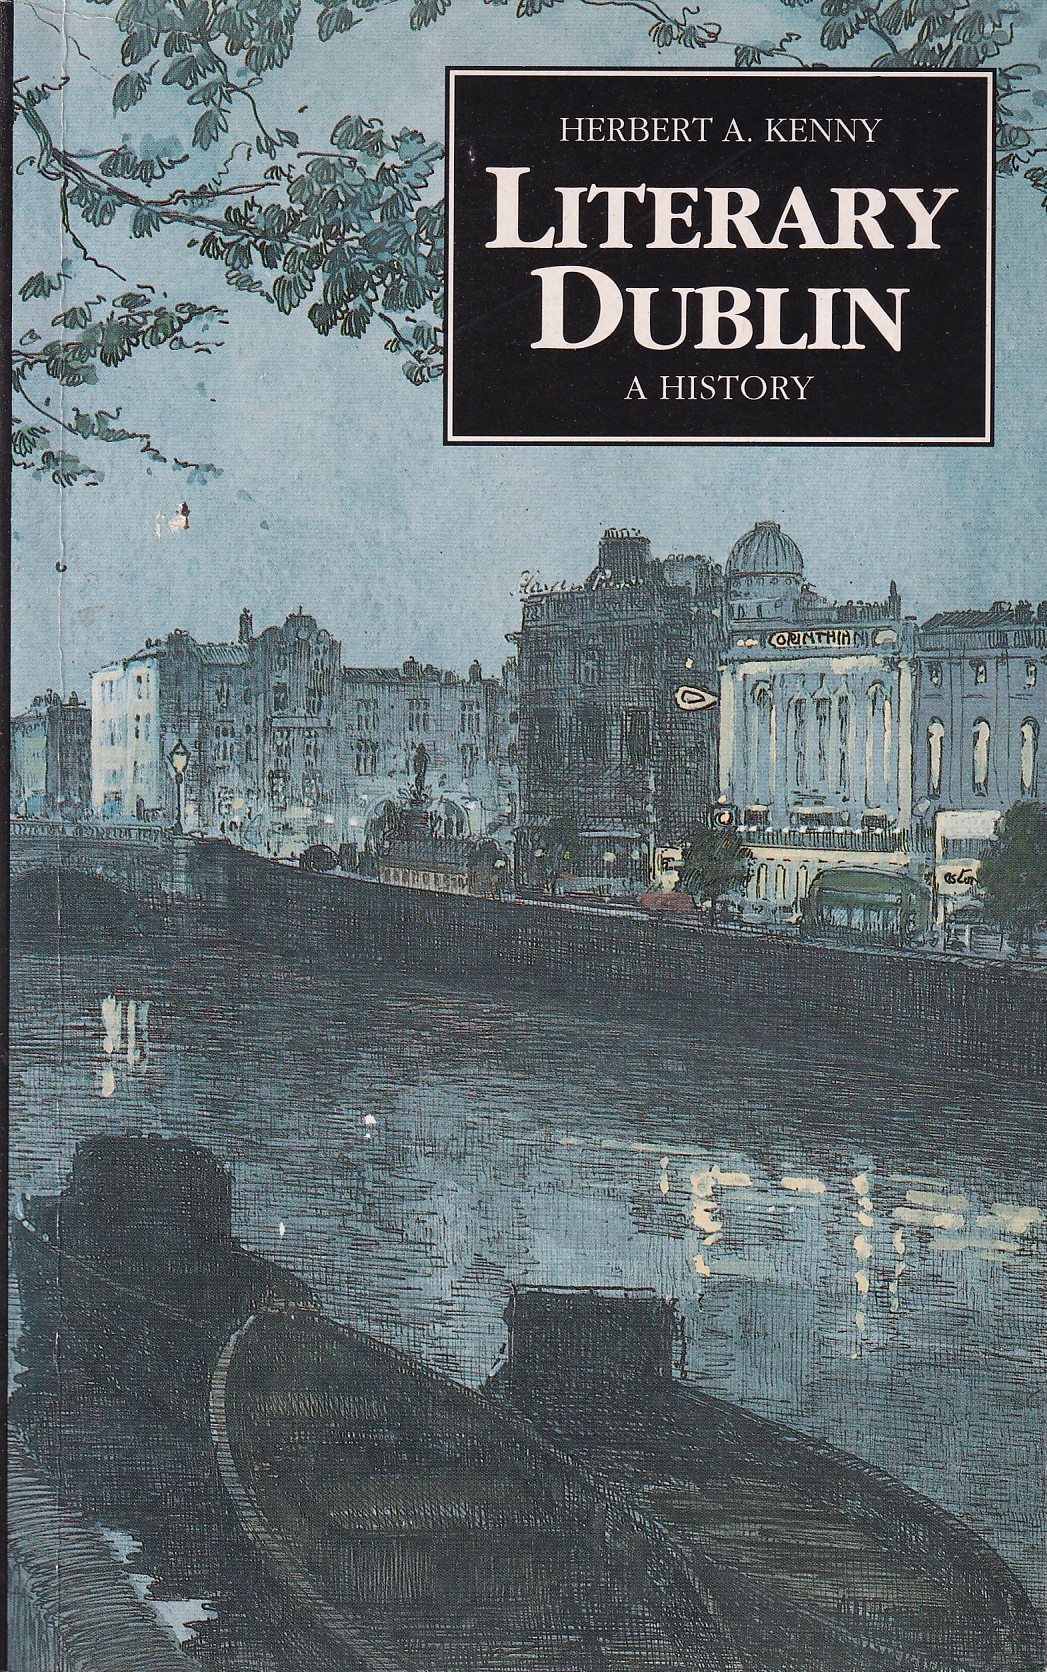 Literary Dublin: A History by Herbert A. Kenny